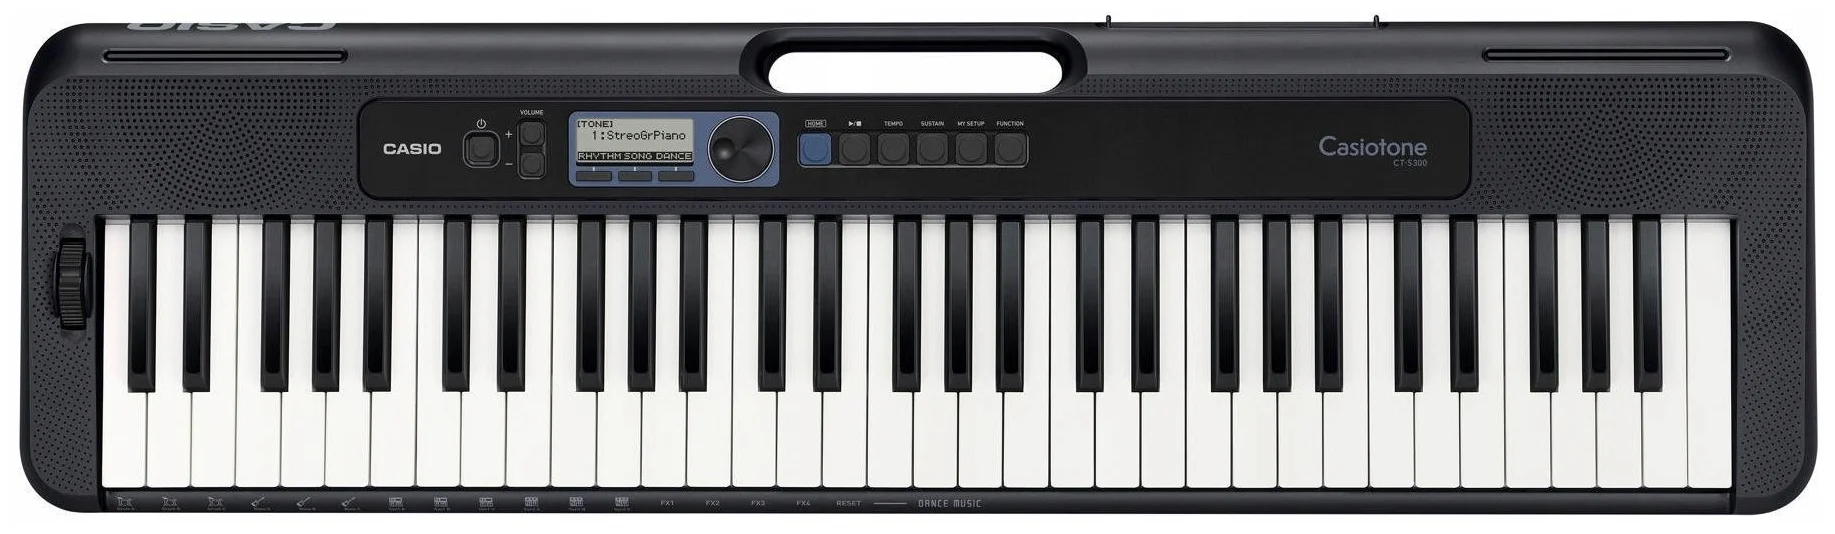 CASIO CT-S300 - размер клавиш: полноразмерные